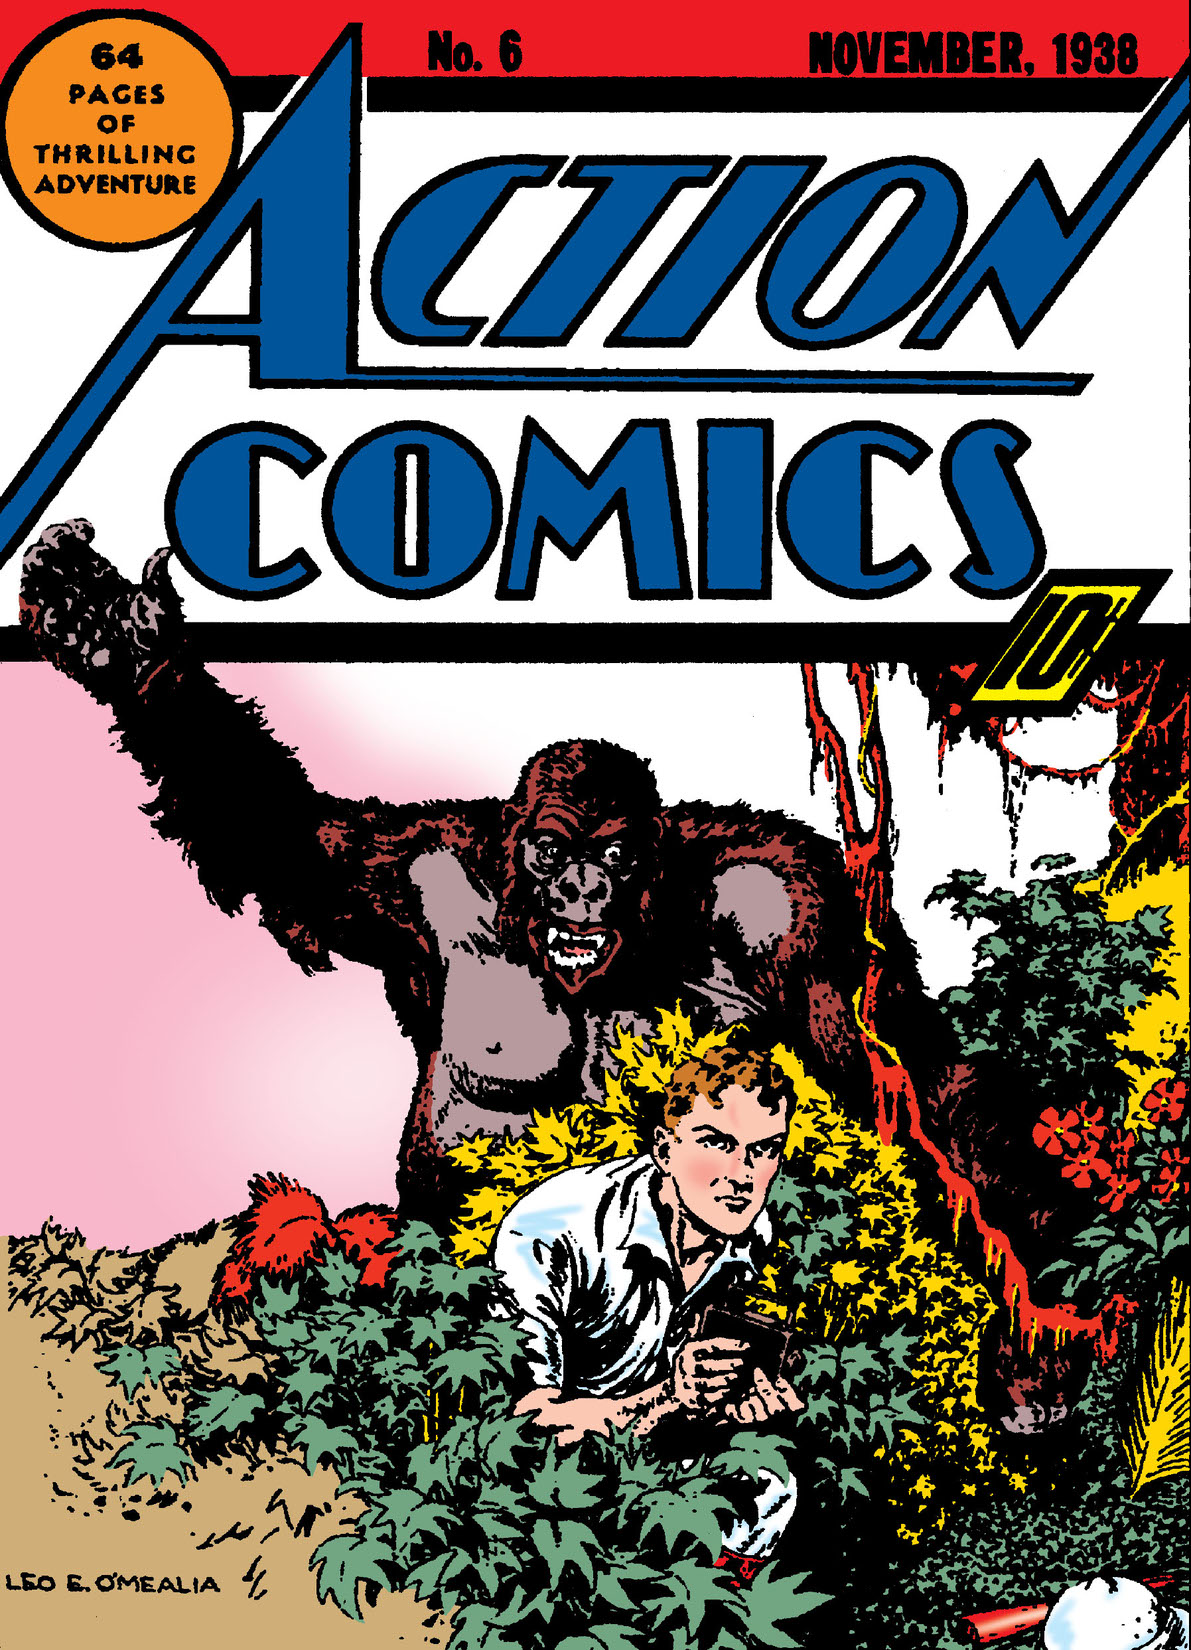 Action Comics (1938-) #6 preview images